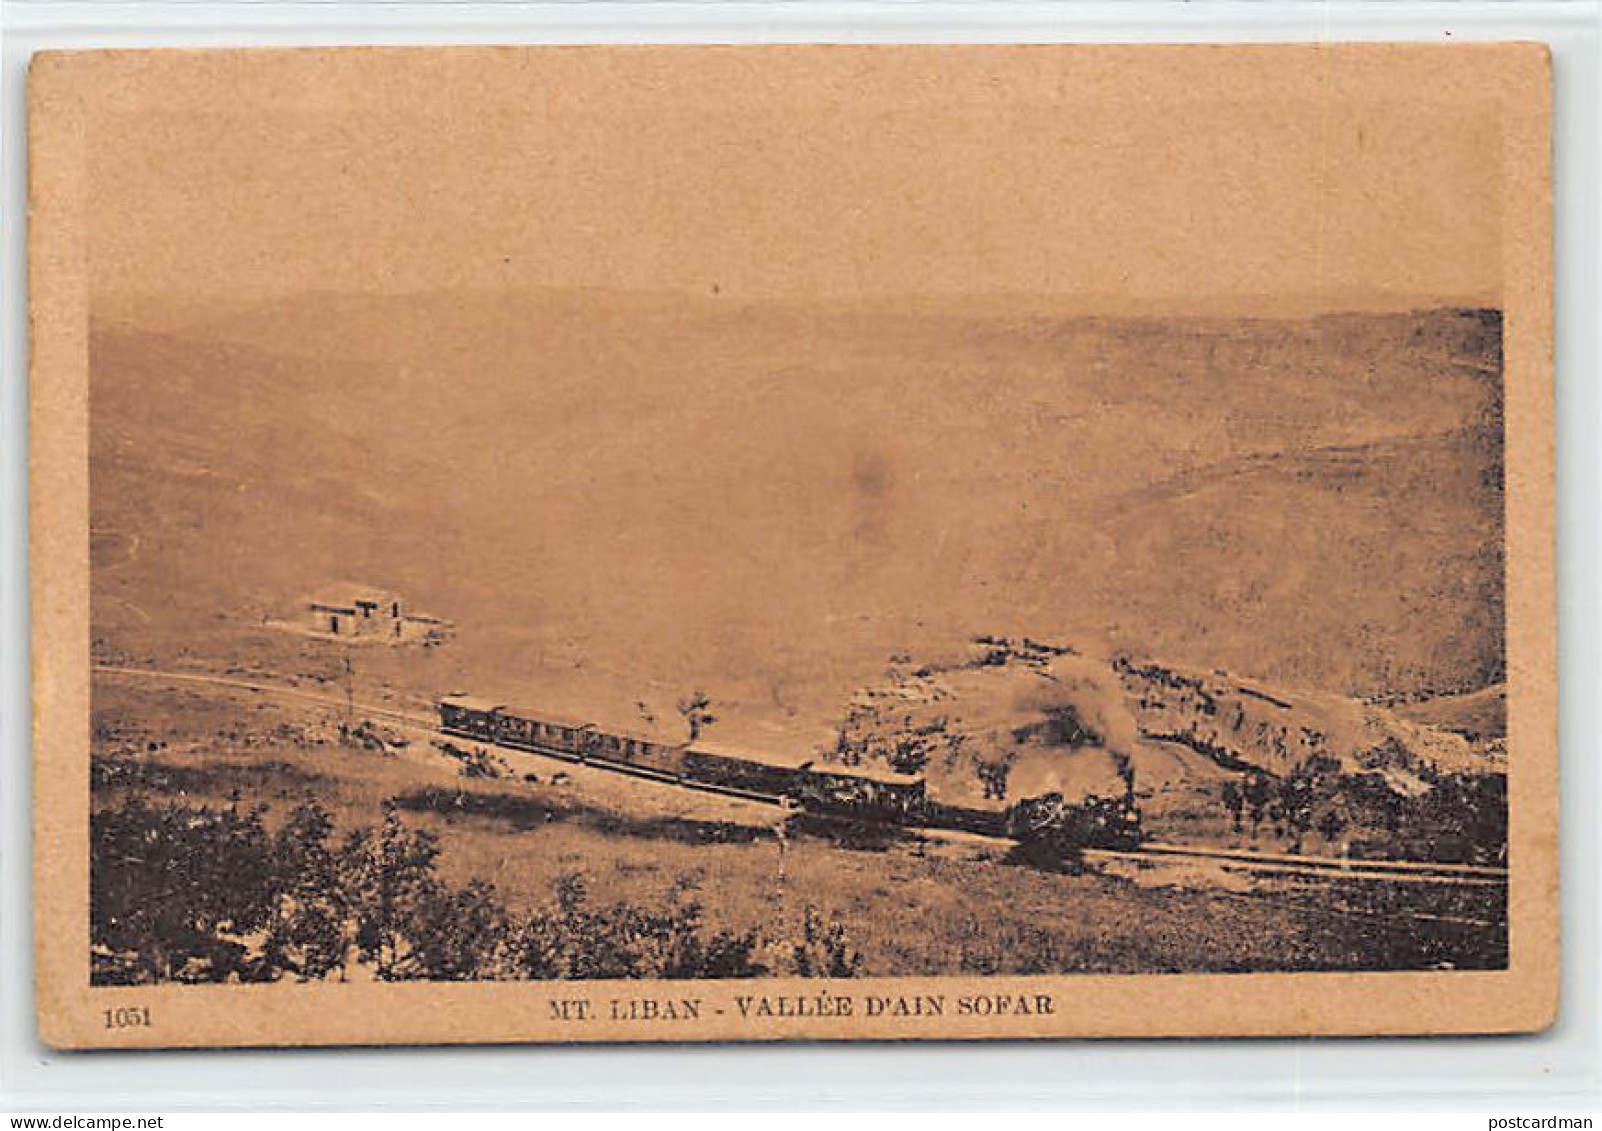 Liban - Vallée D'Ain Sofar (Swafar) - Le Passage Du Train - Ed. Sarrafian Bros. 1051 - Lebanon